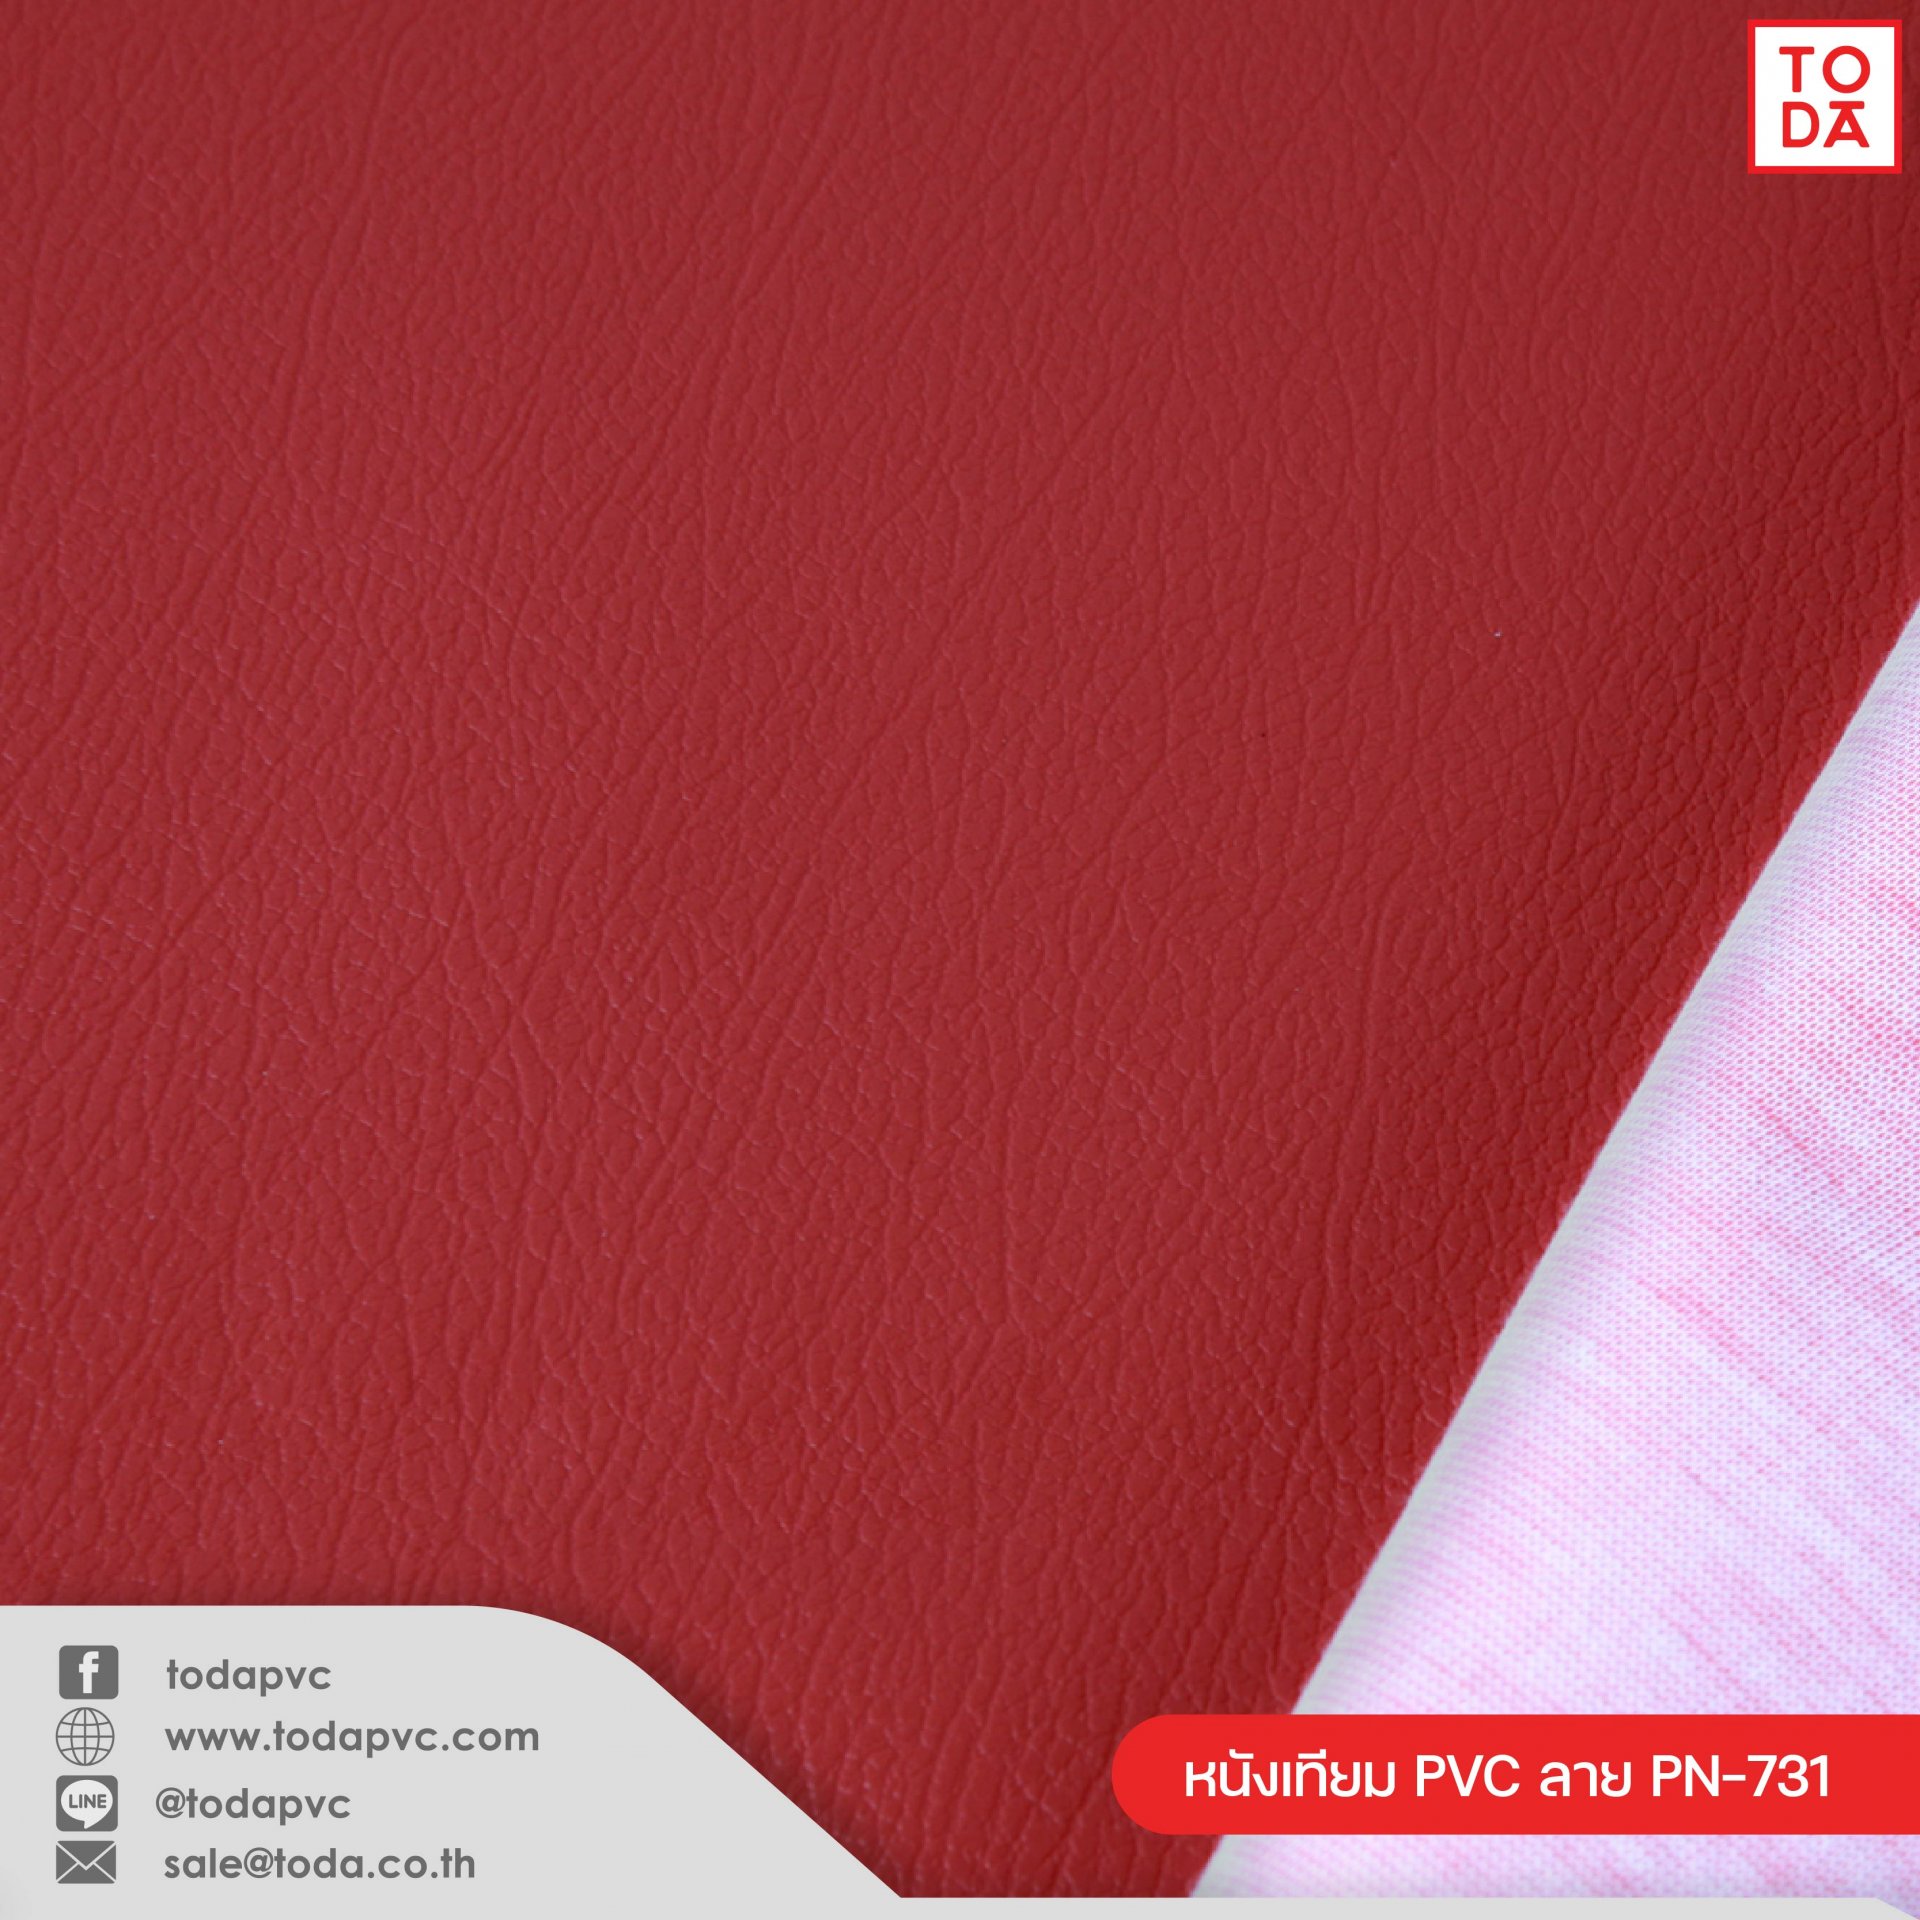 PVC Leather #PN